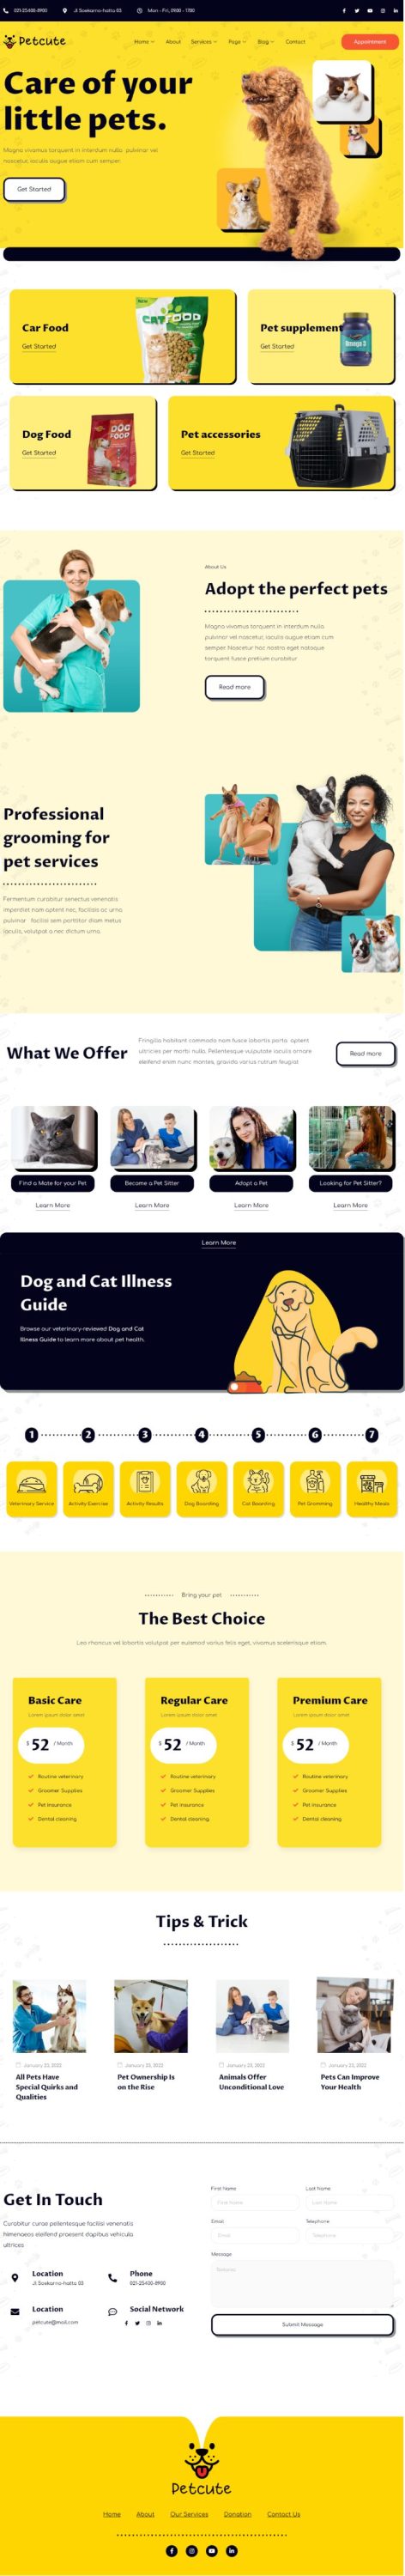 Mẫu website chăm sóc thú cưng - Pet care 2